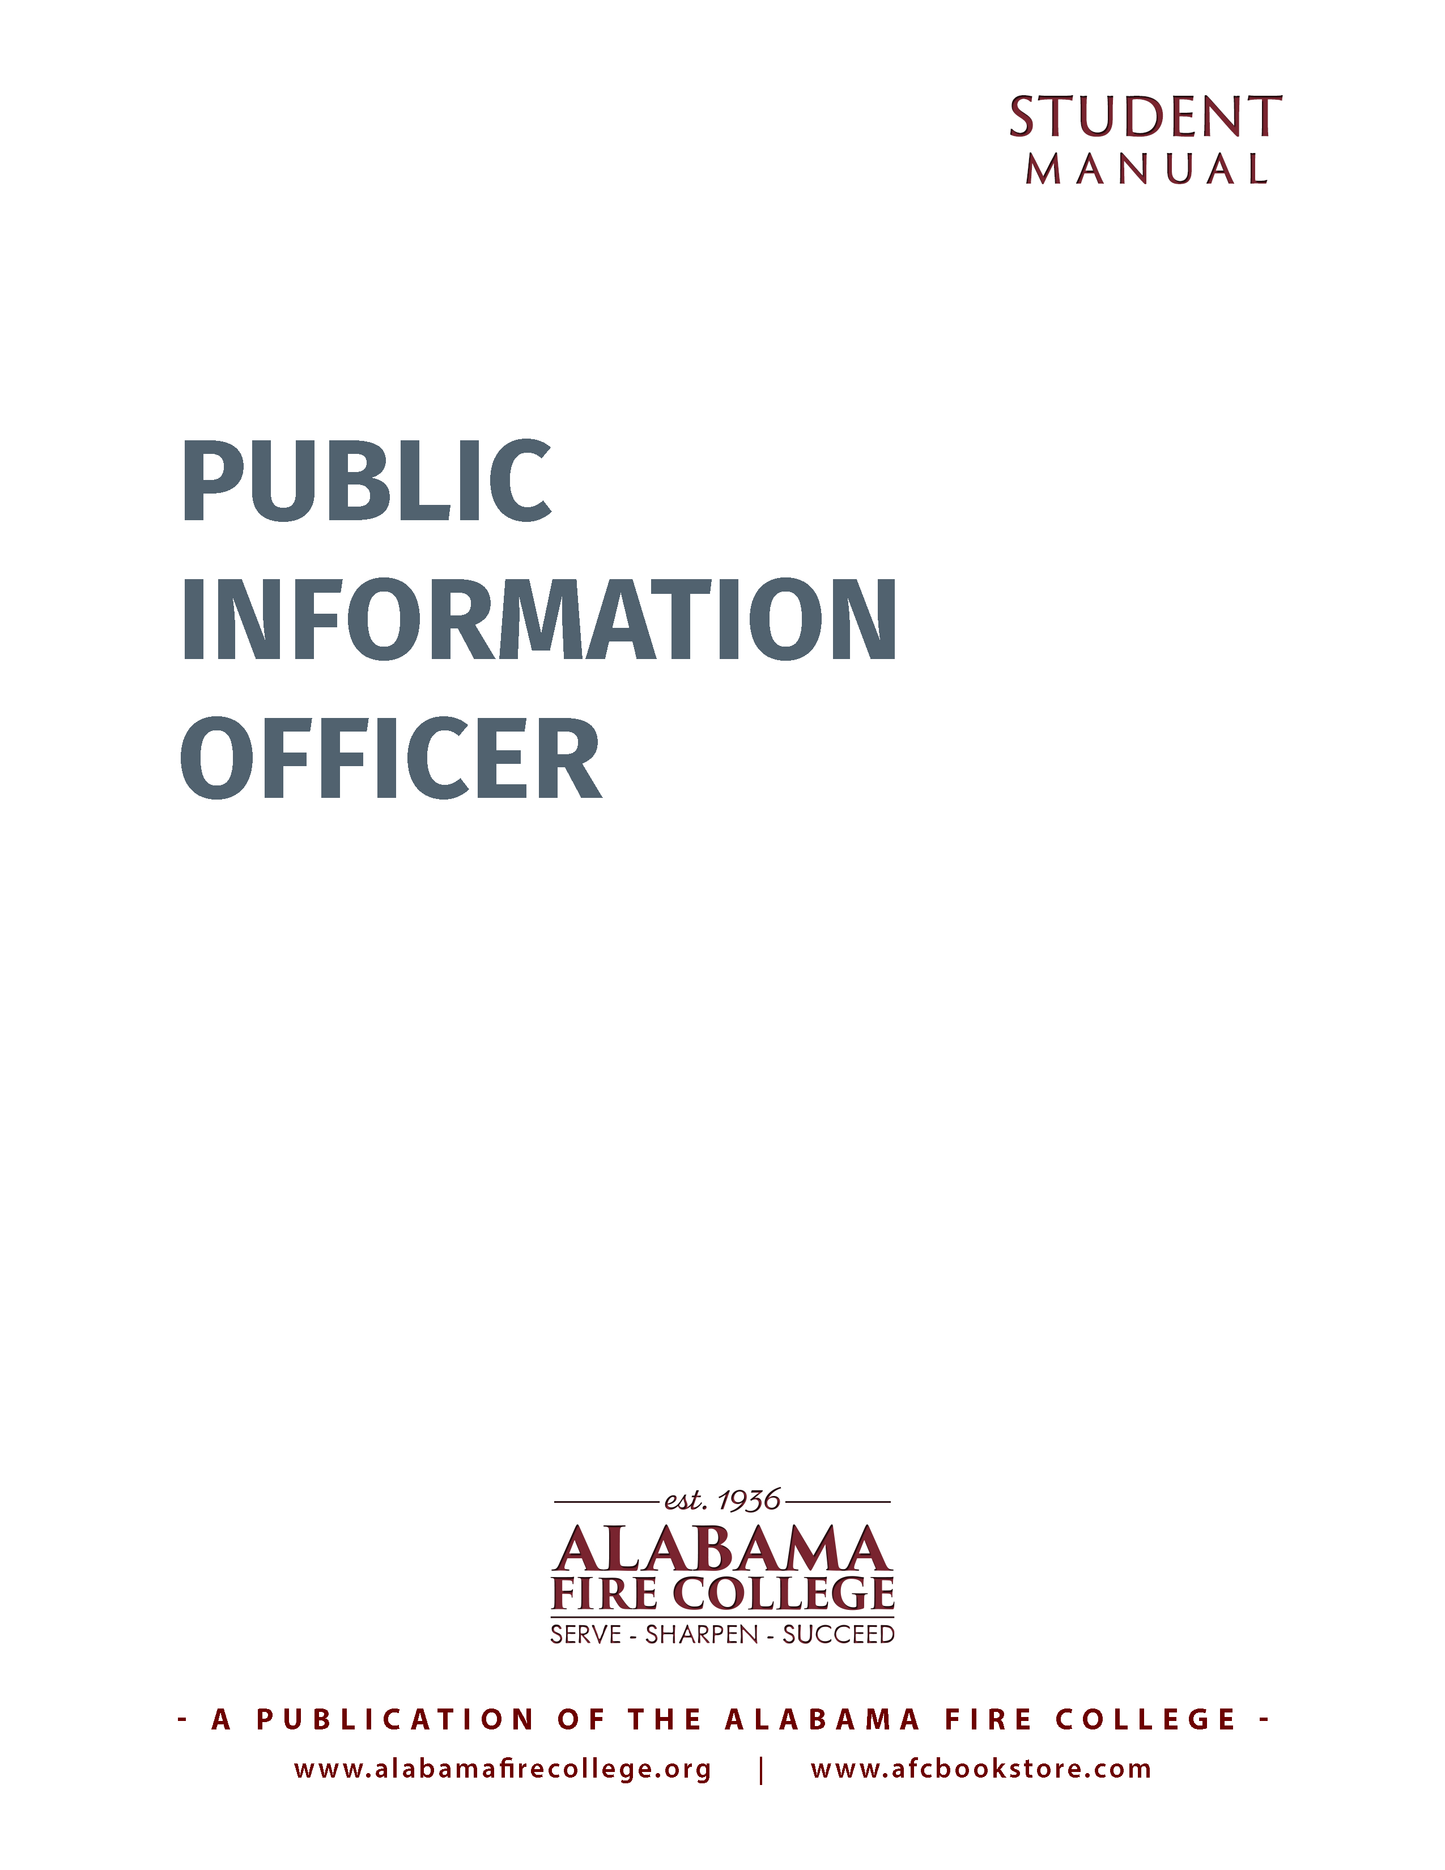 Public Information Officer Student Manual